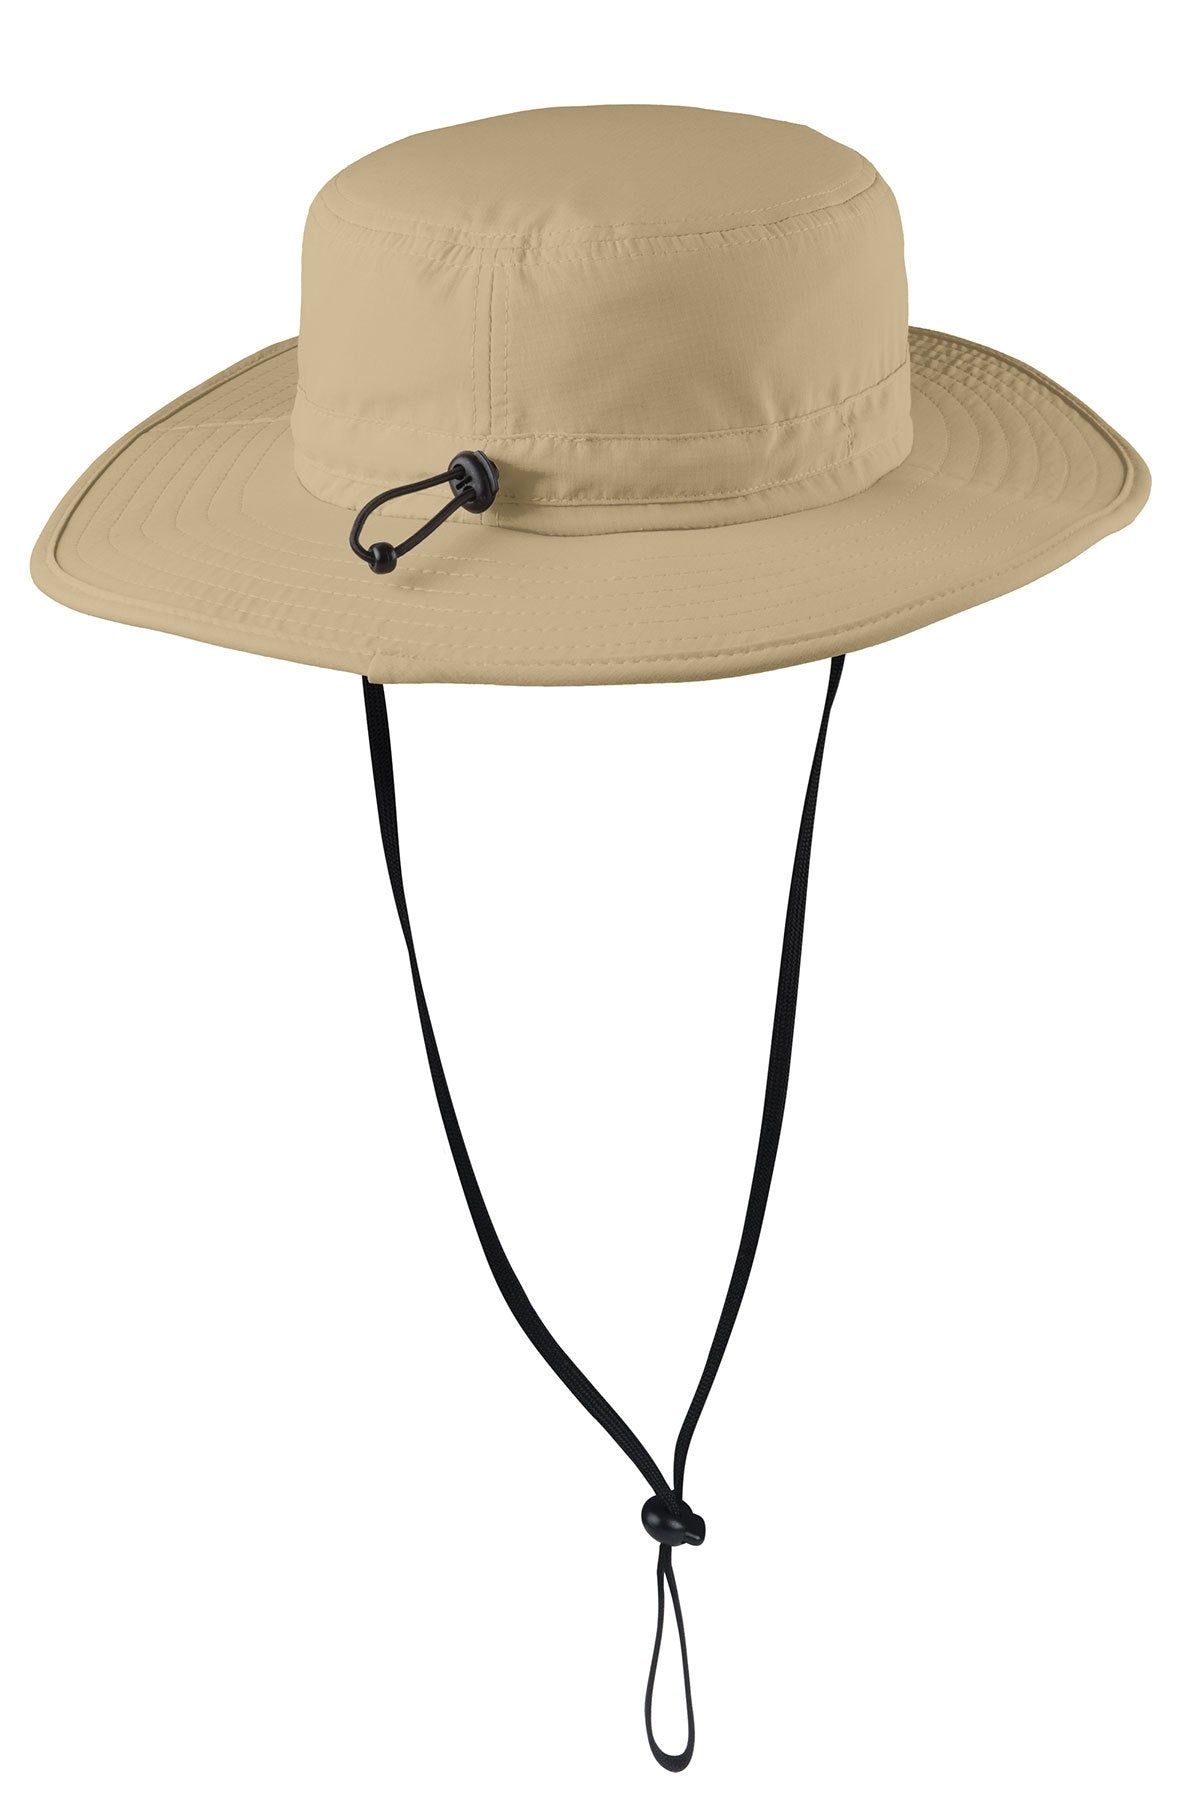 GRPS HEALTH SERVICES Outdoor Wide-Brim Hat